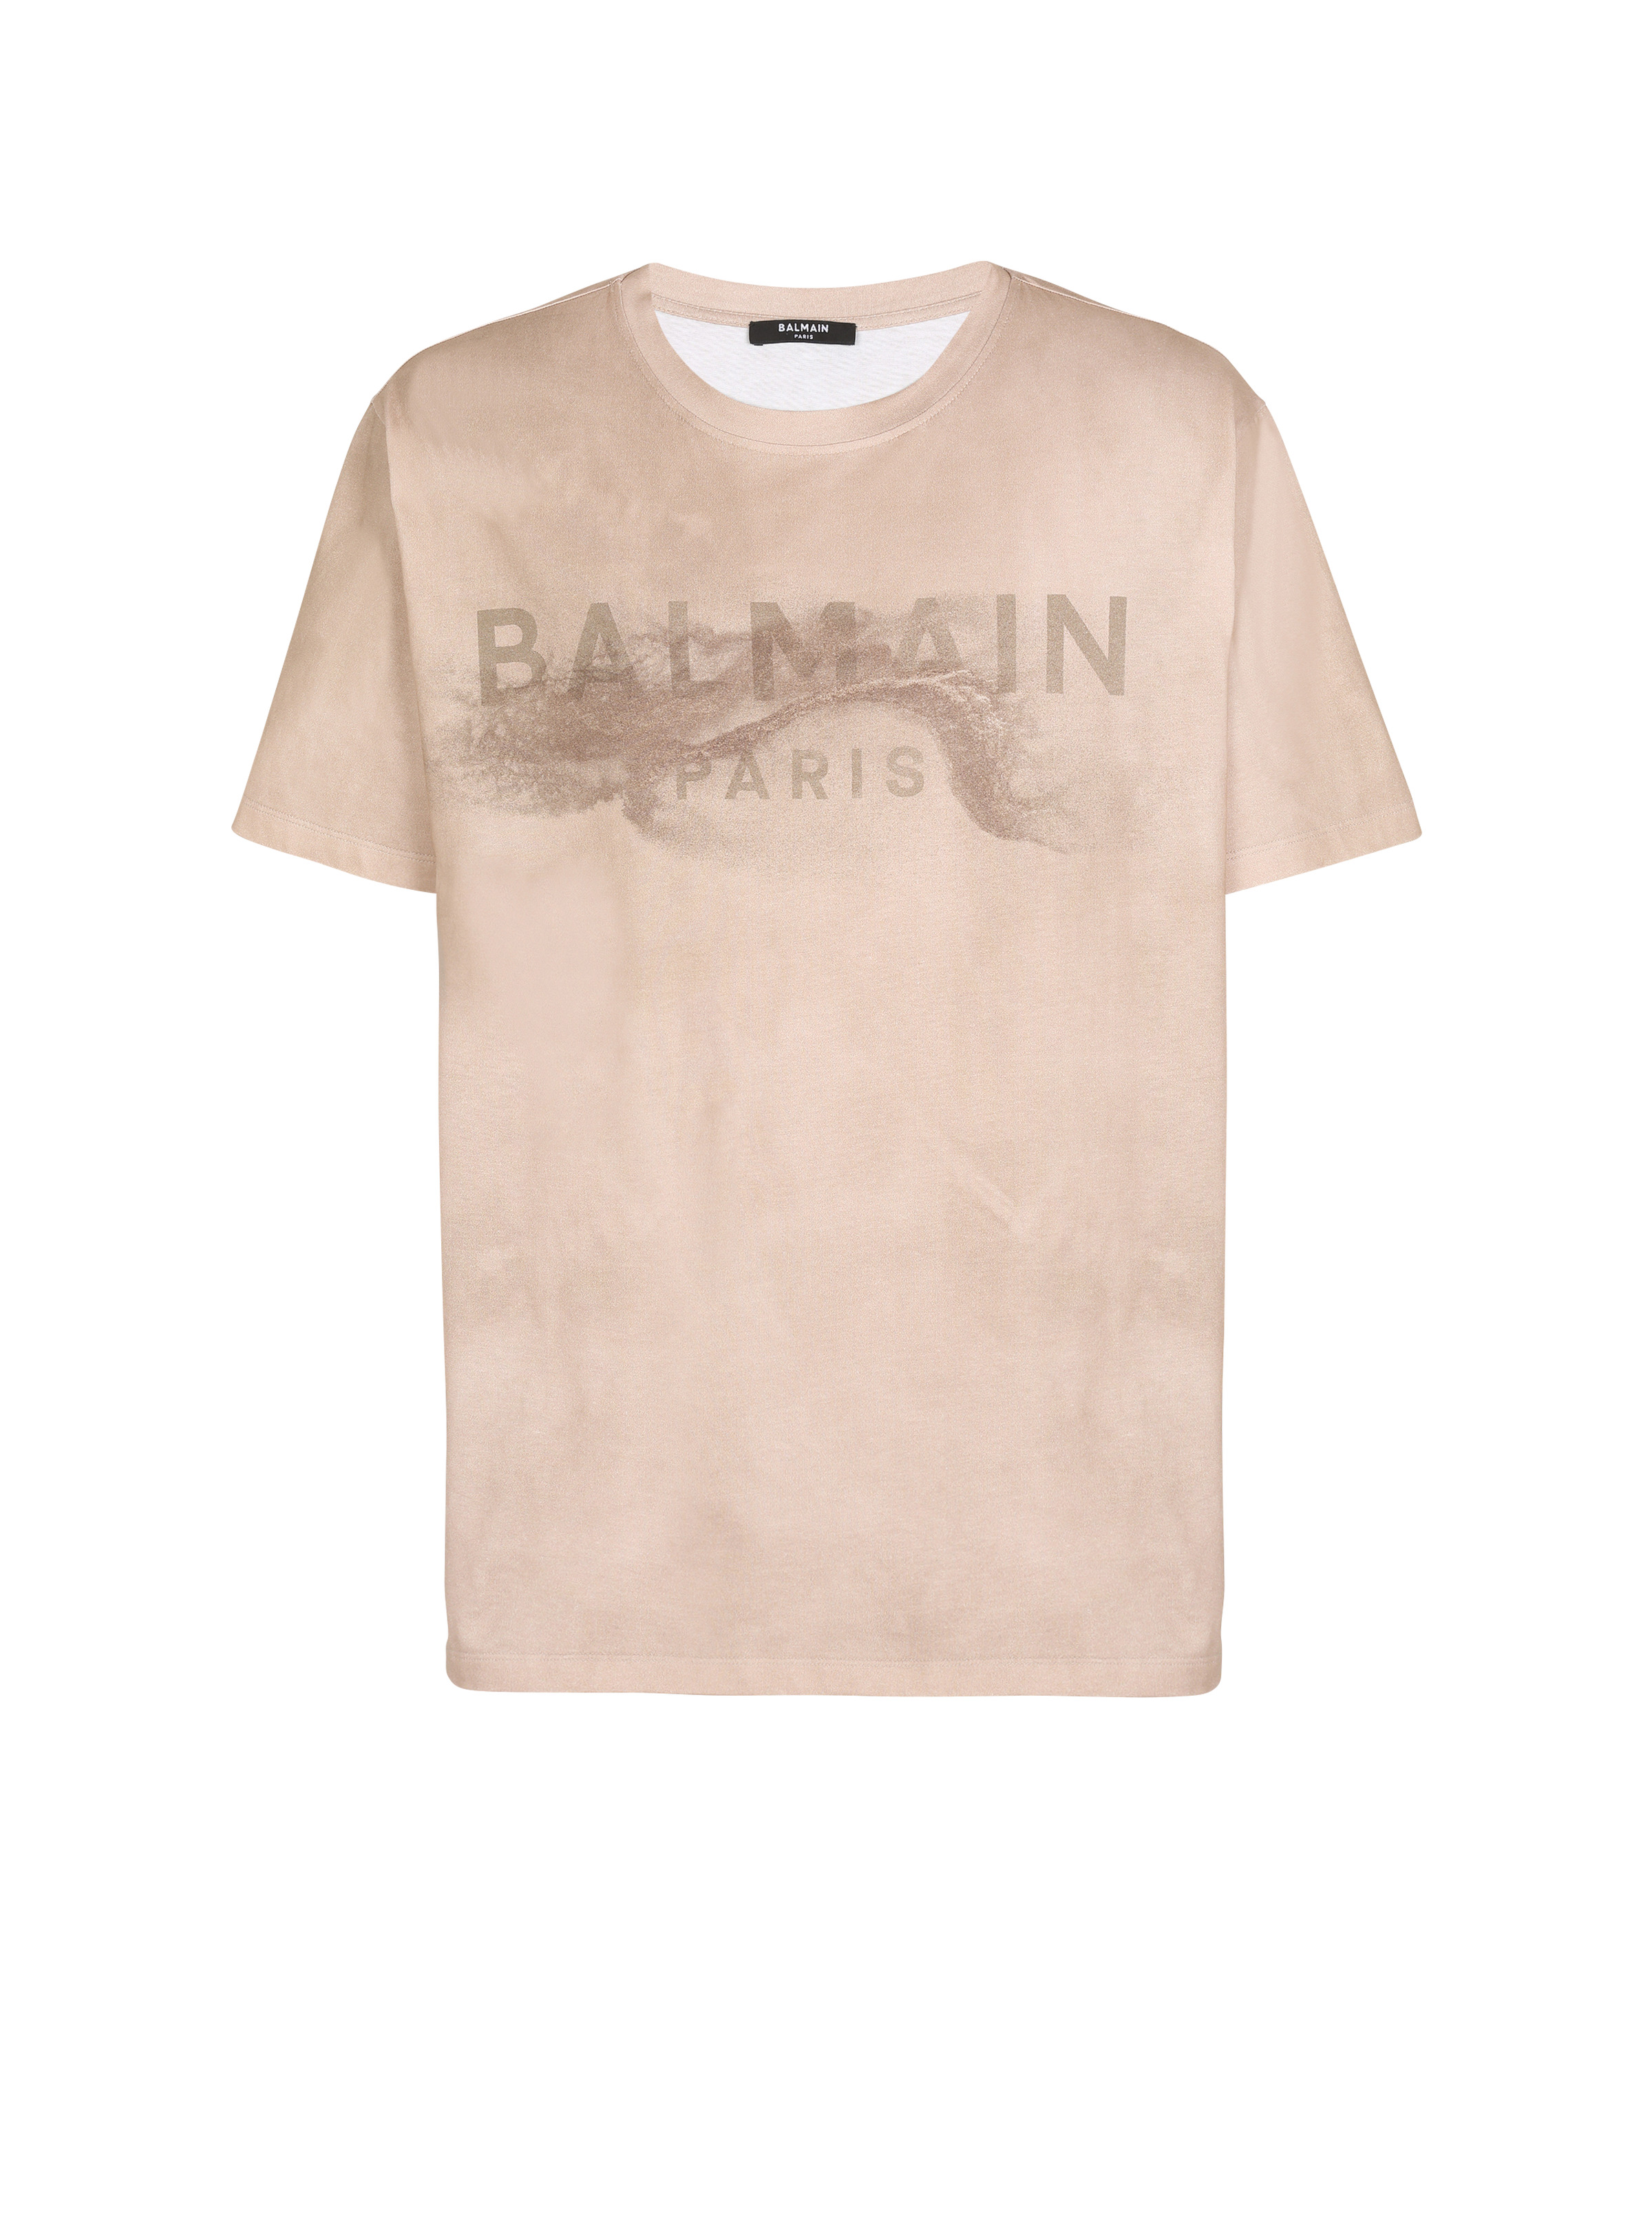 T-shirt in eco-responsible cotton with Balmain Paris desert logo - 1